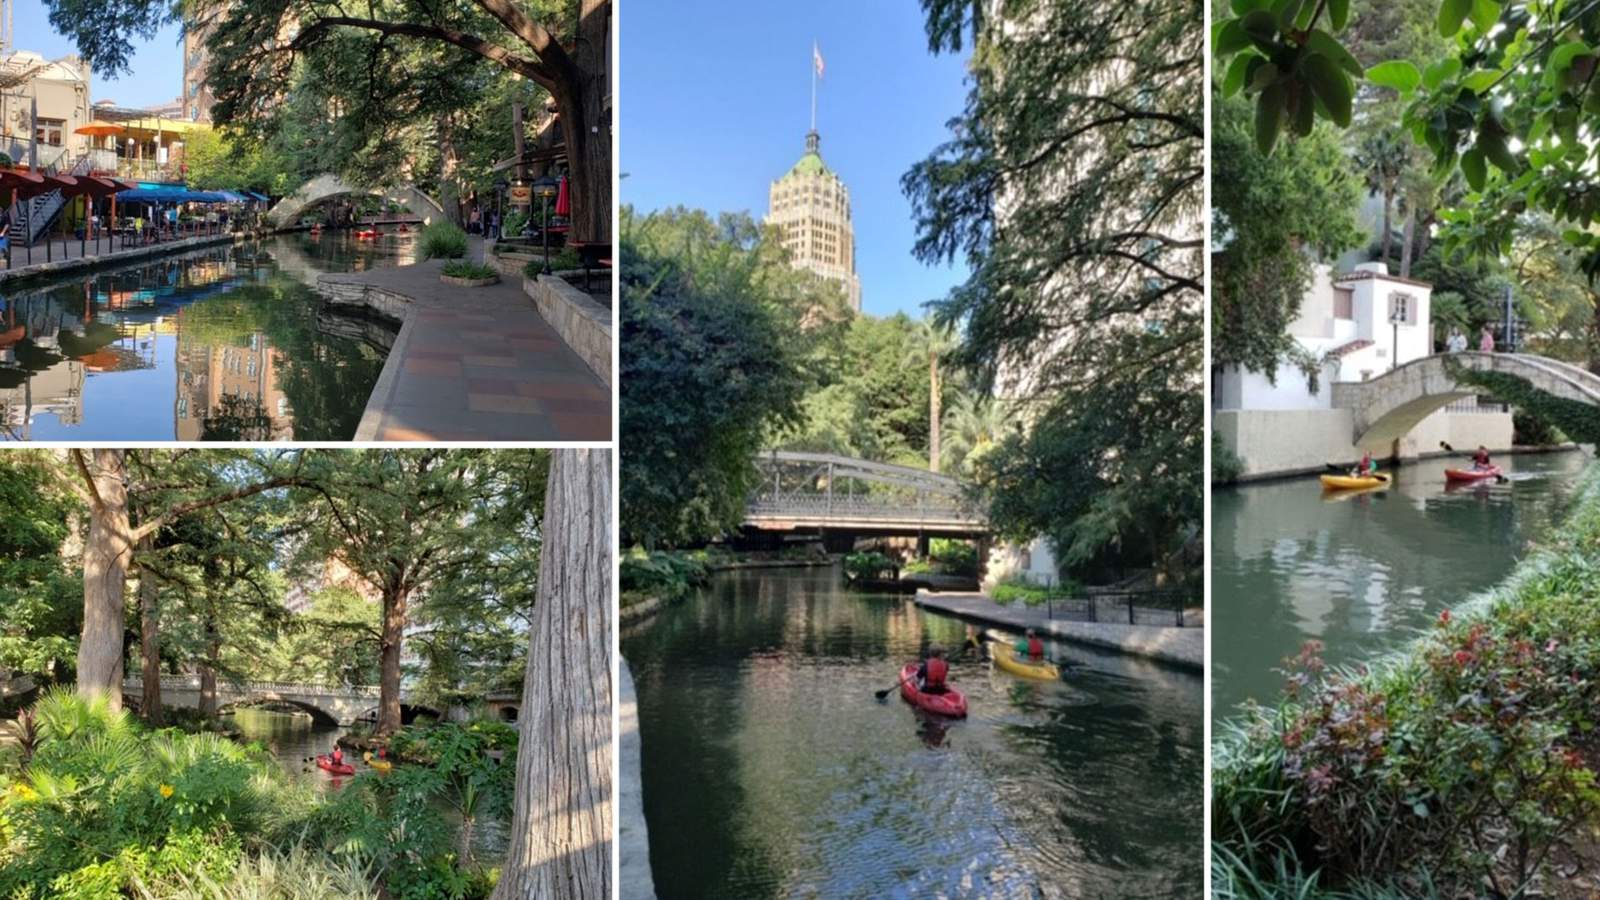 Take advantage of rare opportunity to kayak along San Antonio River Walk business district